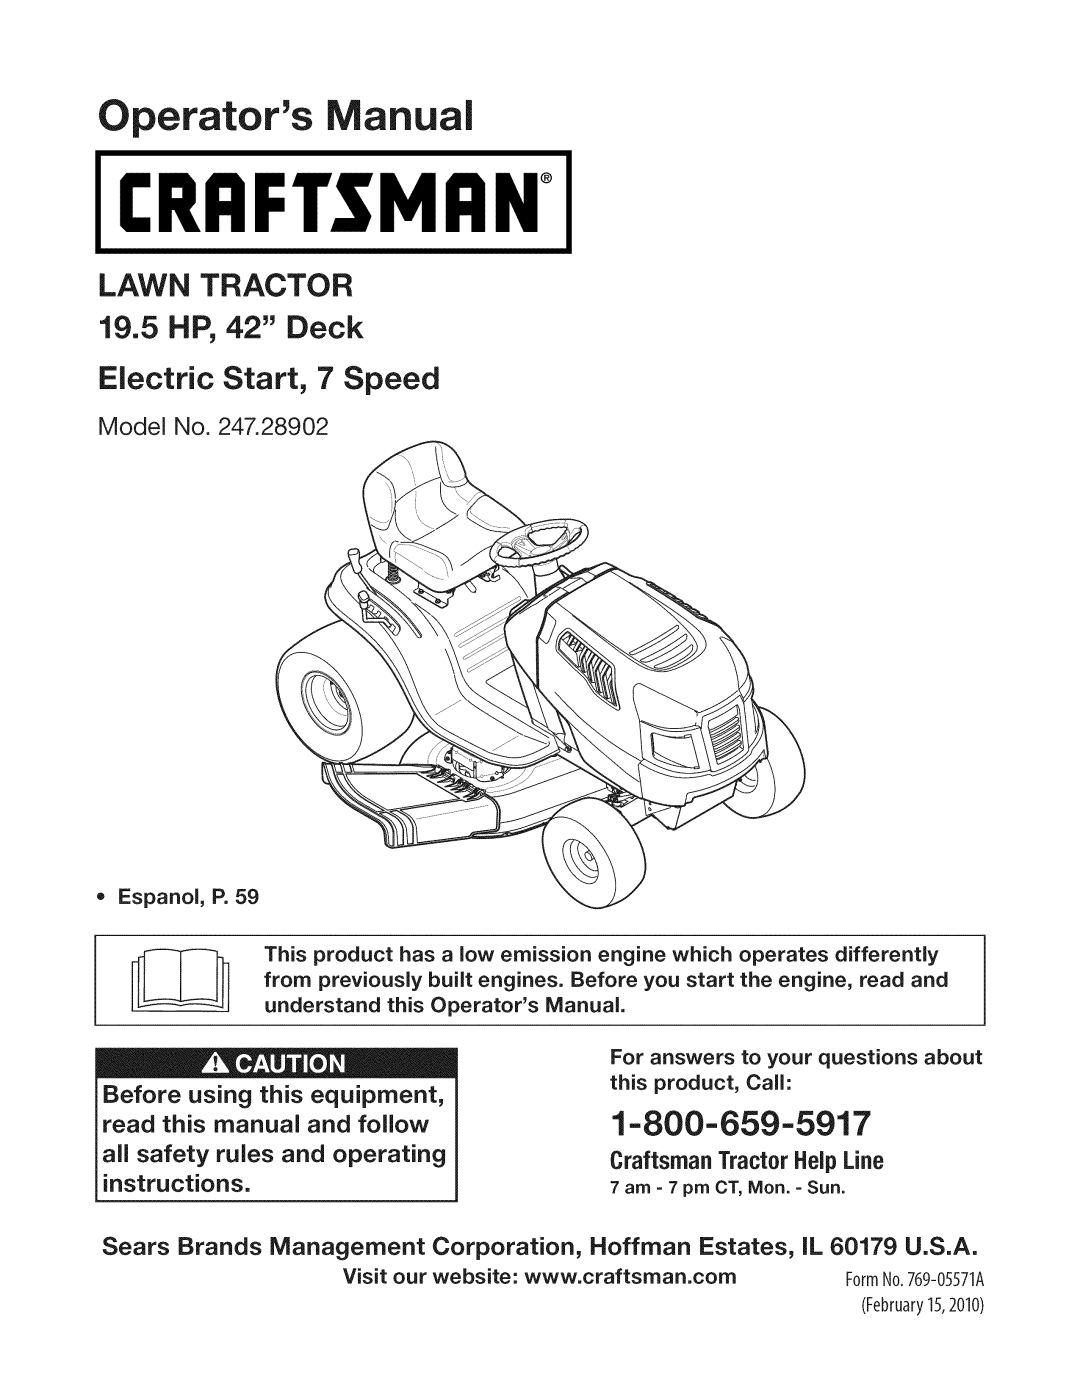 Craftsman 247.28902 manual perators, I:RnFrSMRN, 1-800=659=5917, Lawn Tractor, 19.5 HI:,42 Deck, Electric Start, 7 Speed 